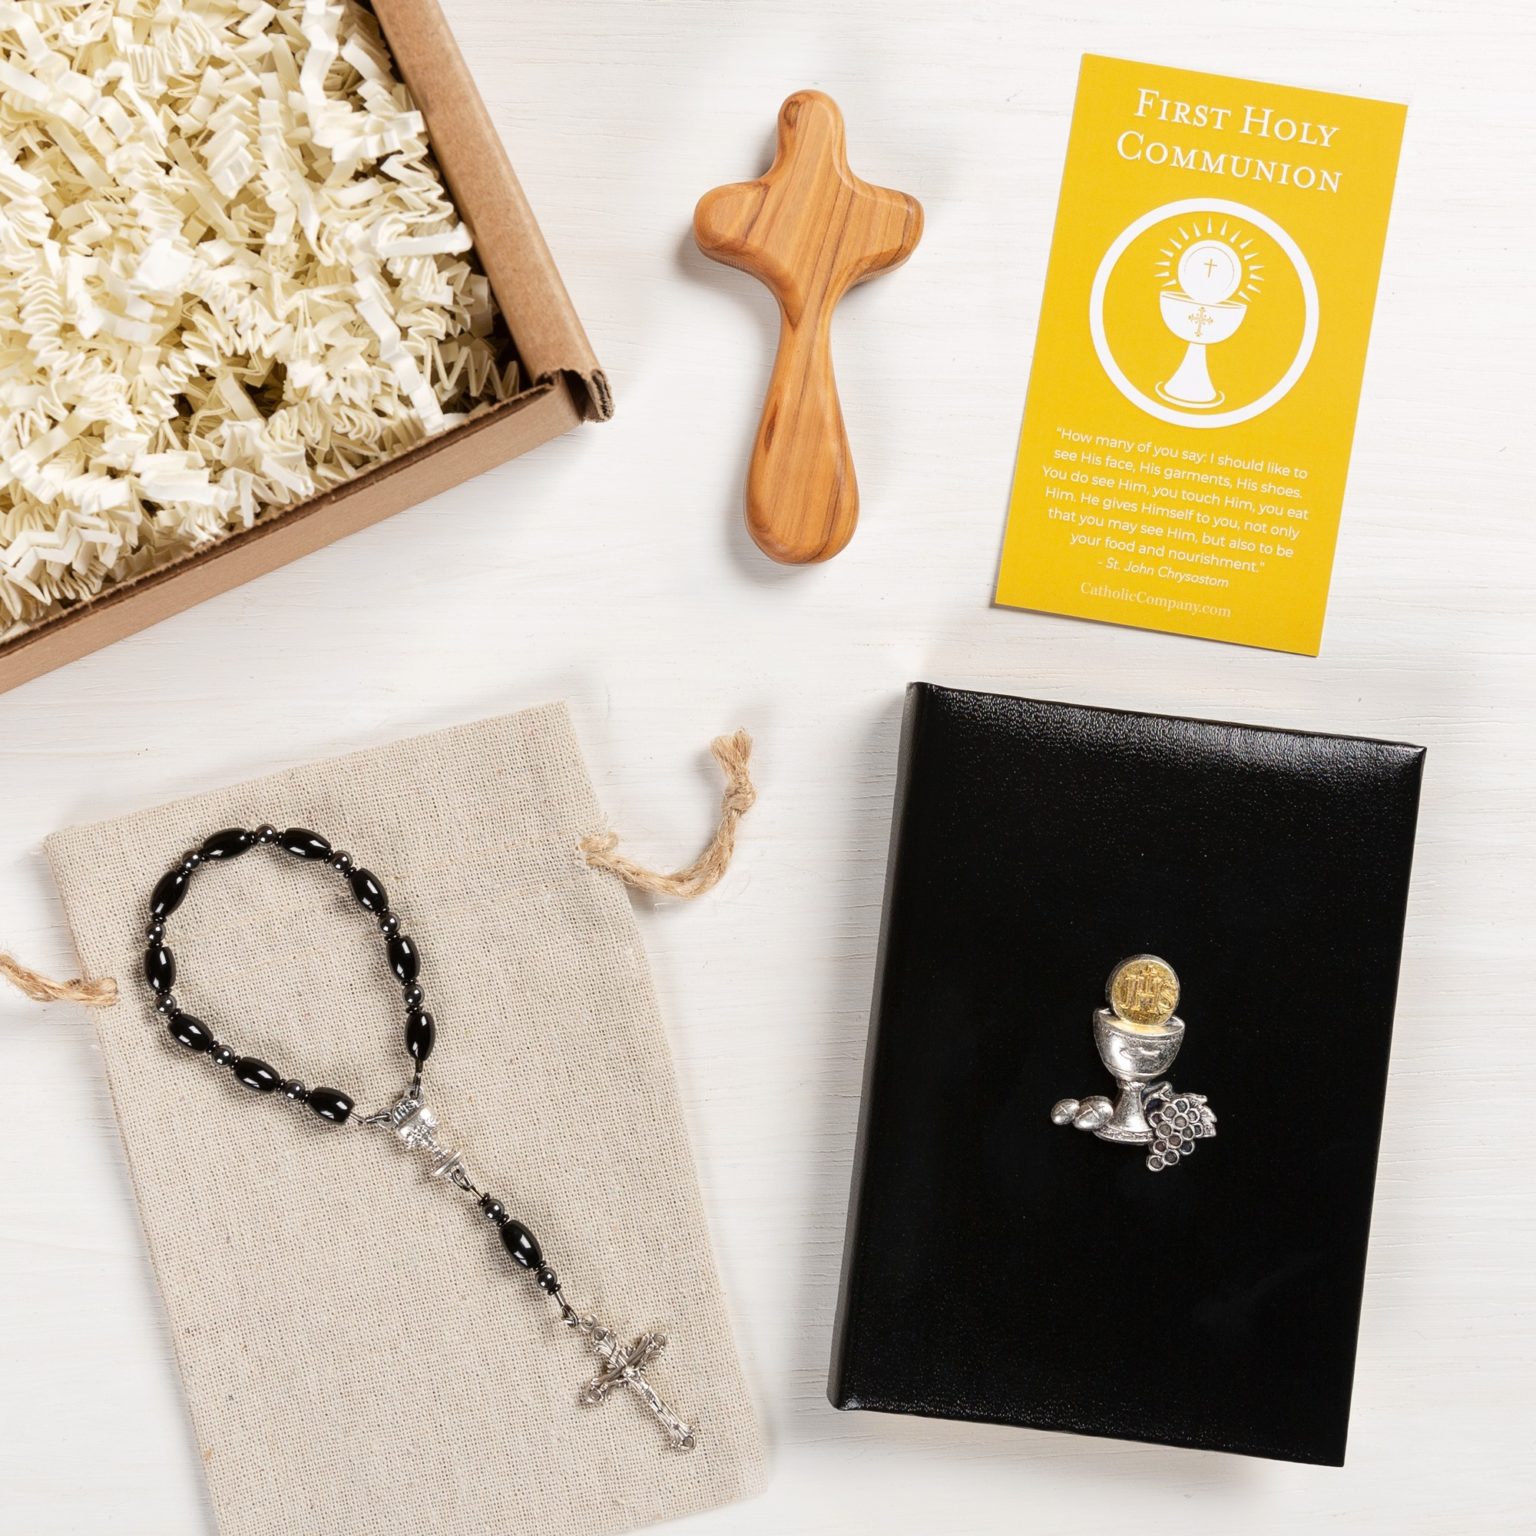 First Communion Gift Ideas for a Boy + Genuflect